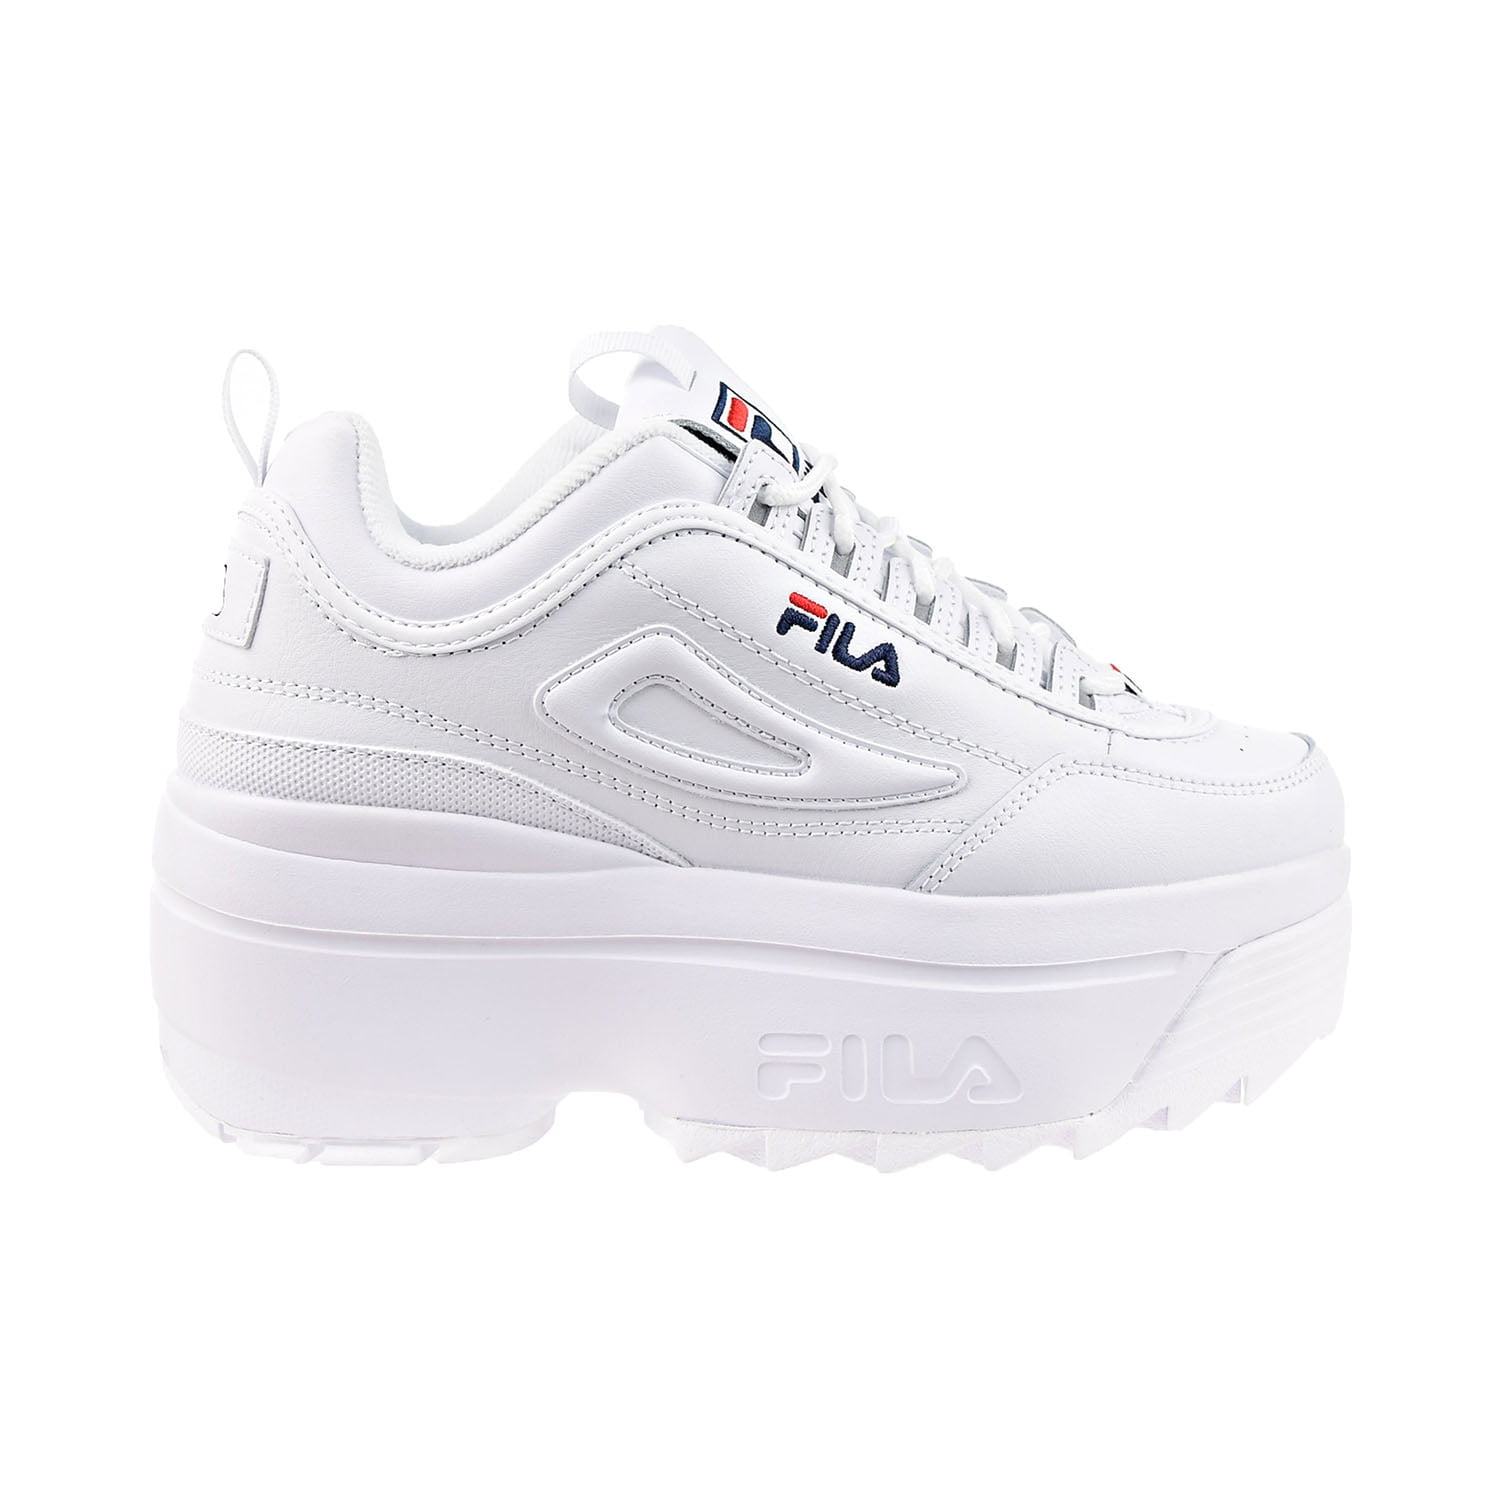 Fila Disruptor II Wedge Women's Shoes White-Navy-Red 5fm00704-125 ...